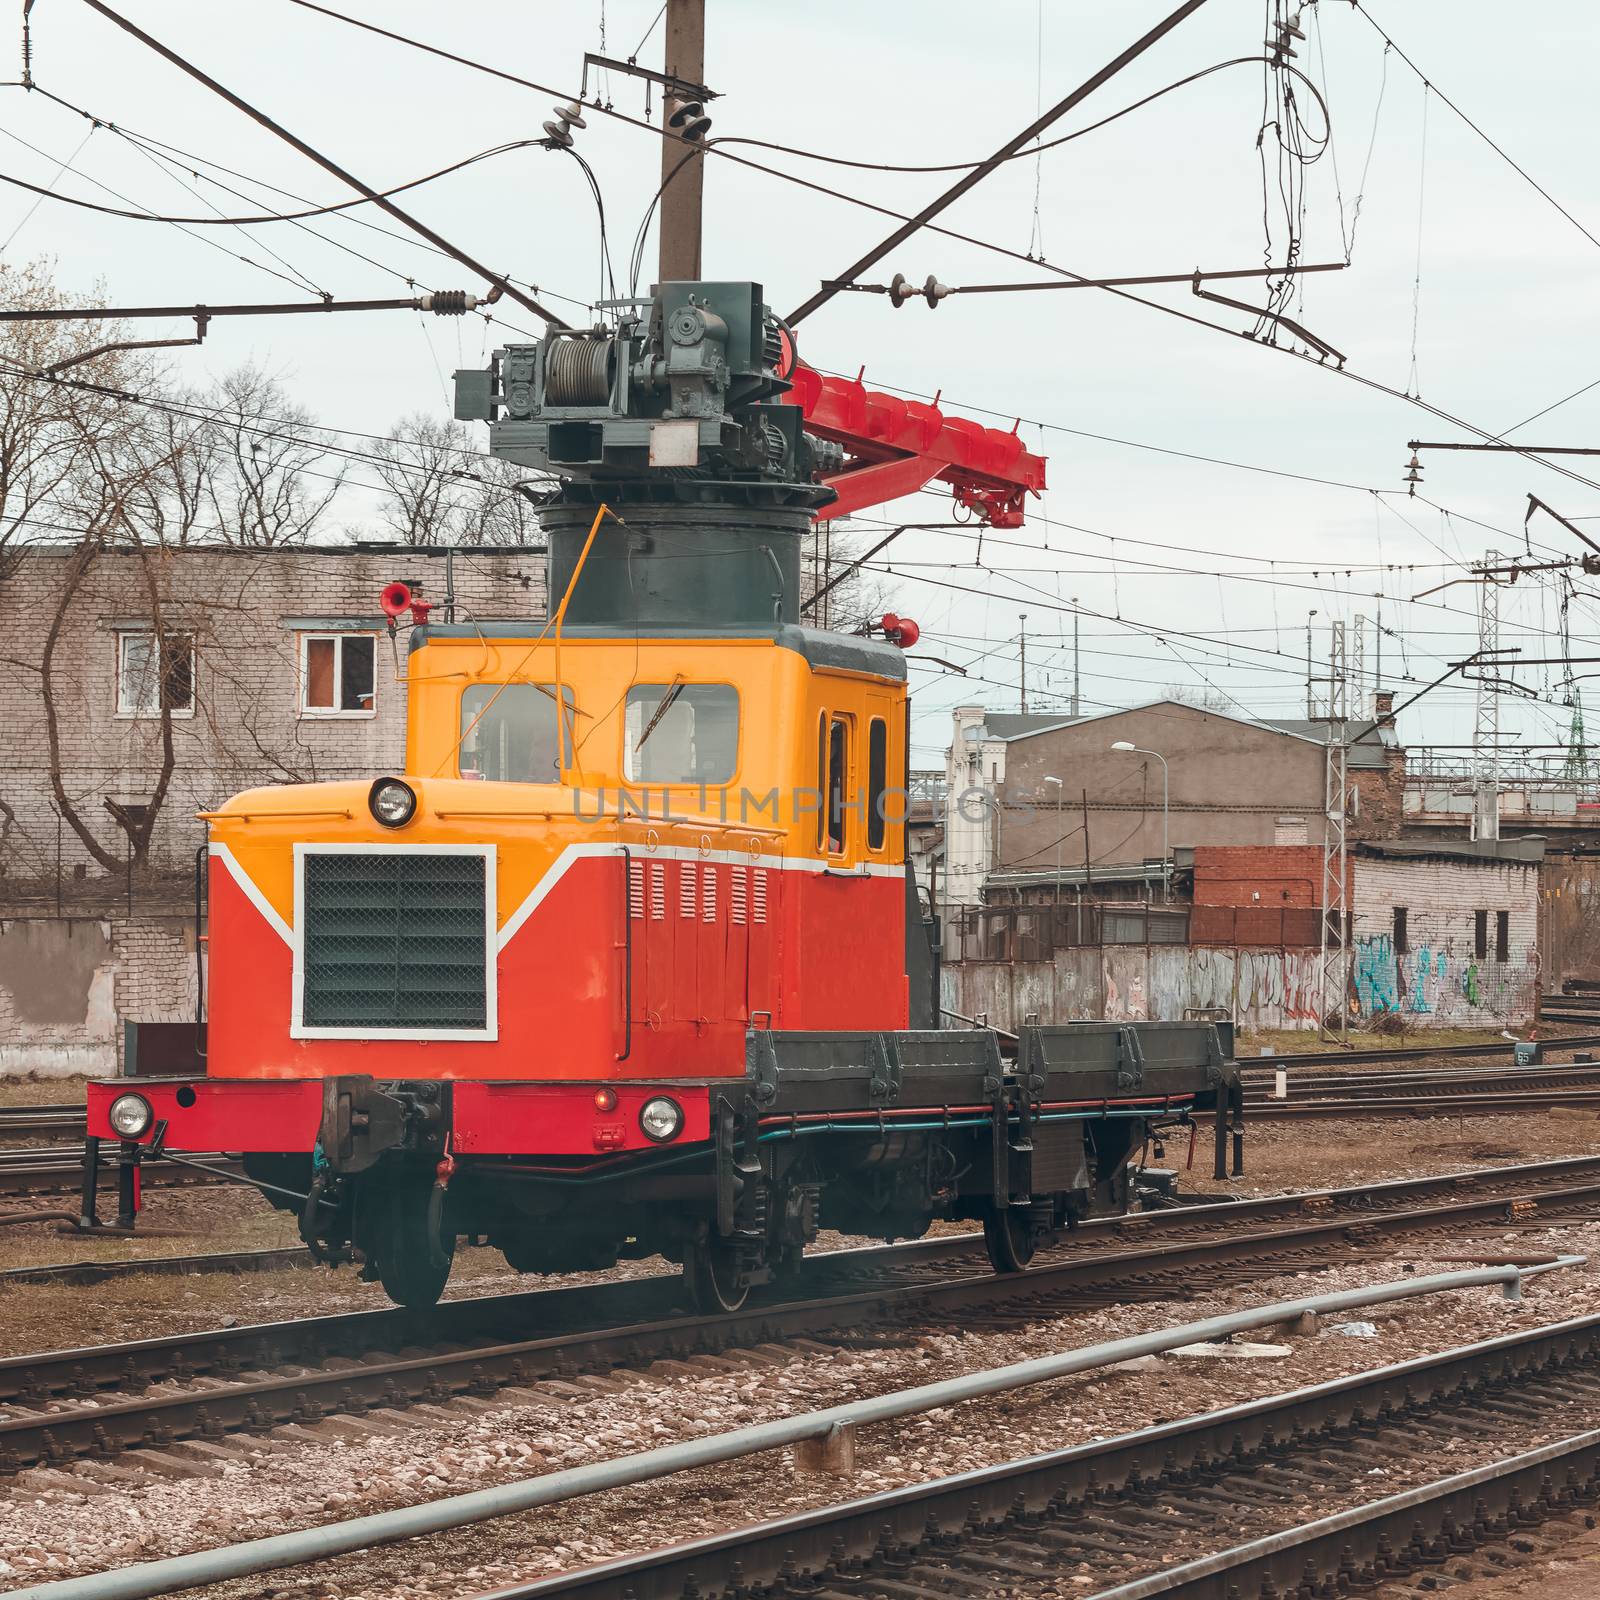 Small repair train by sengnsp